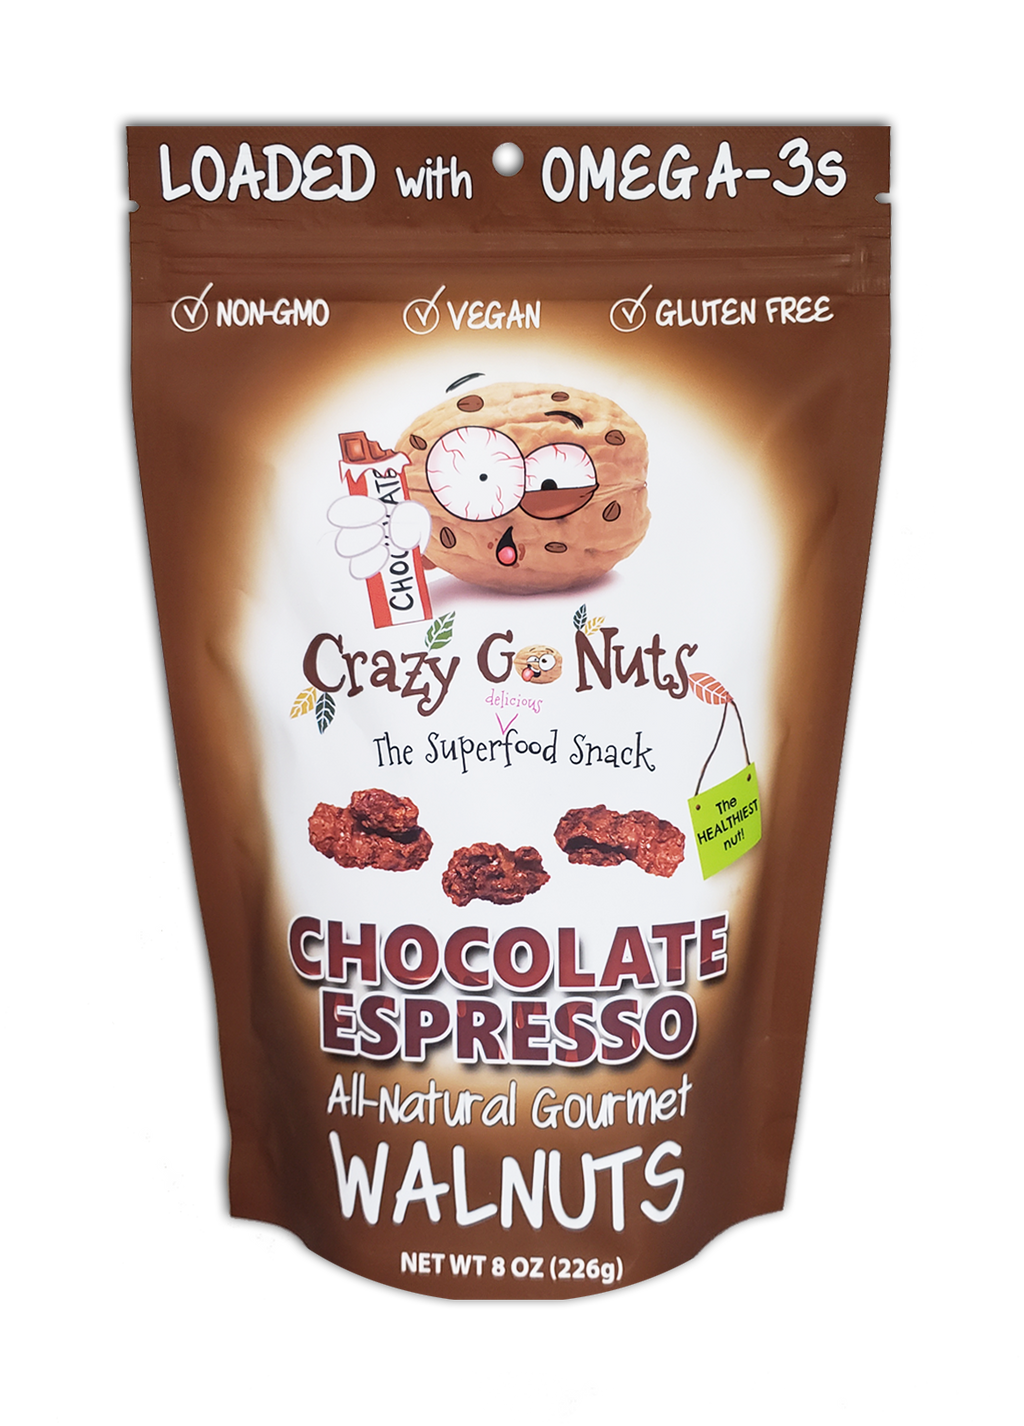 A bag of chocolate espresso coated walnut snacks